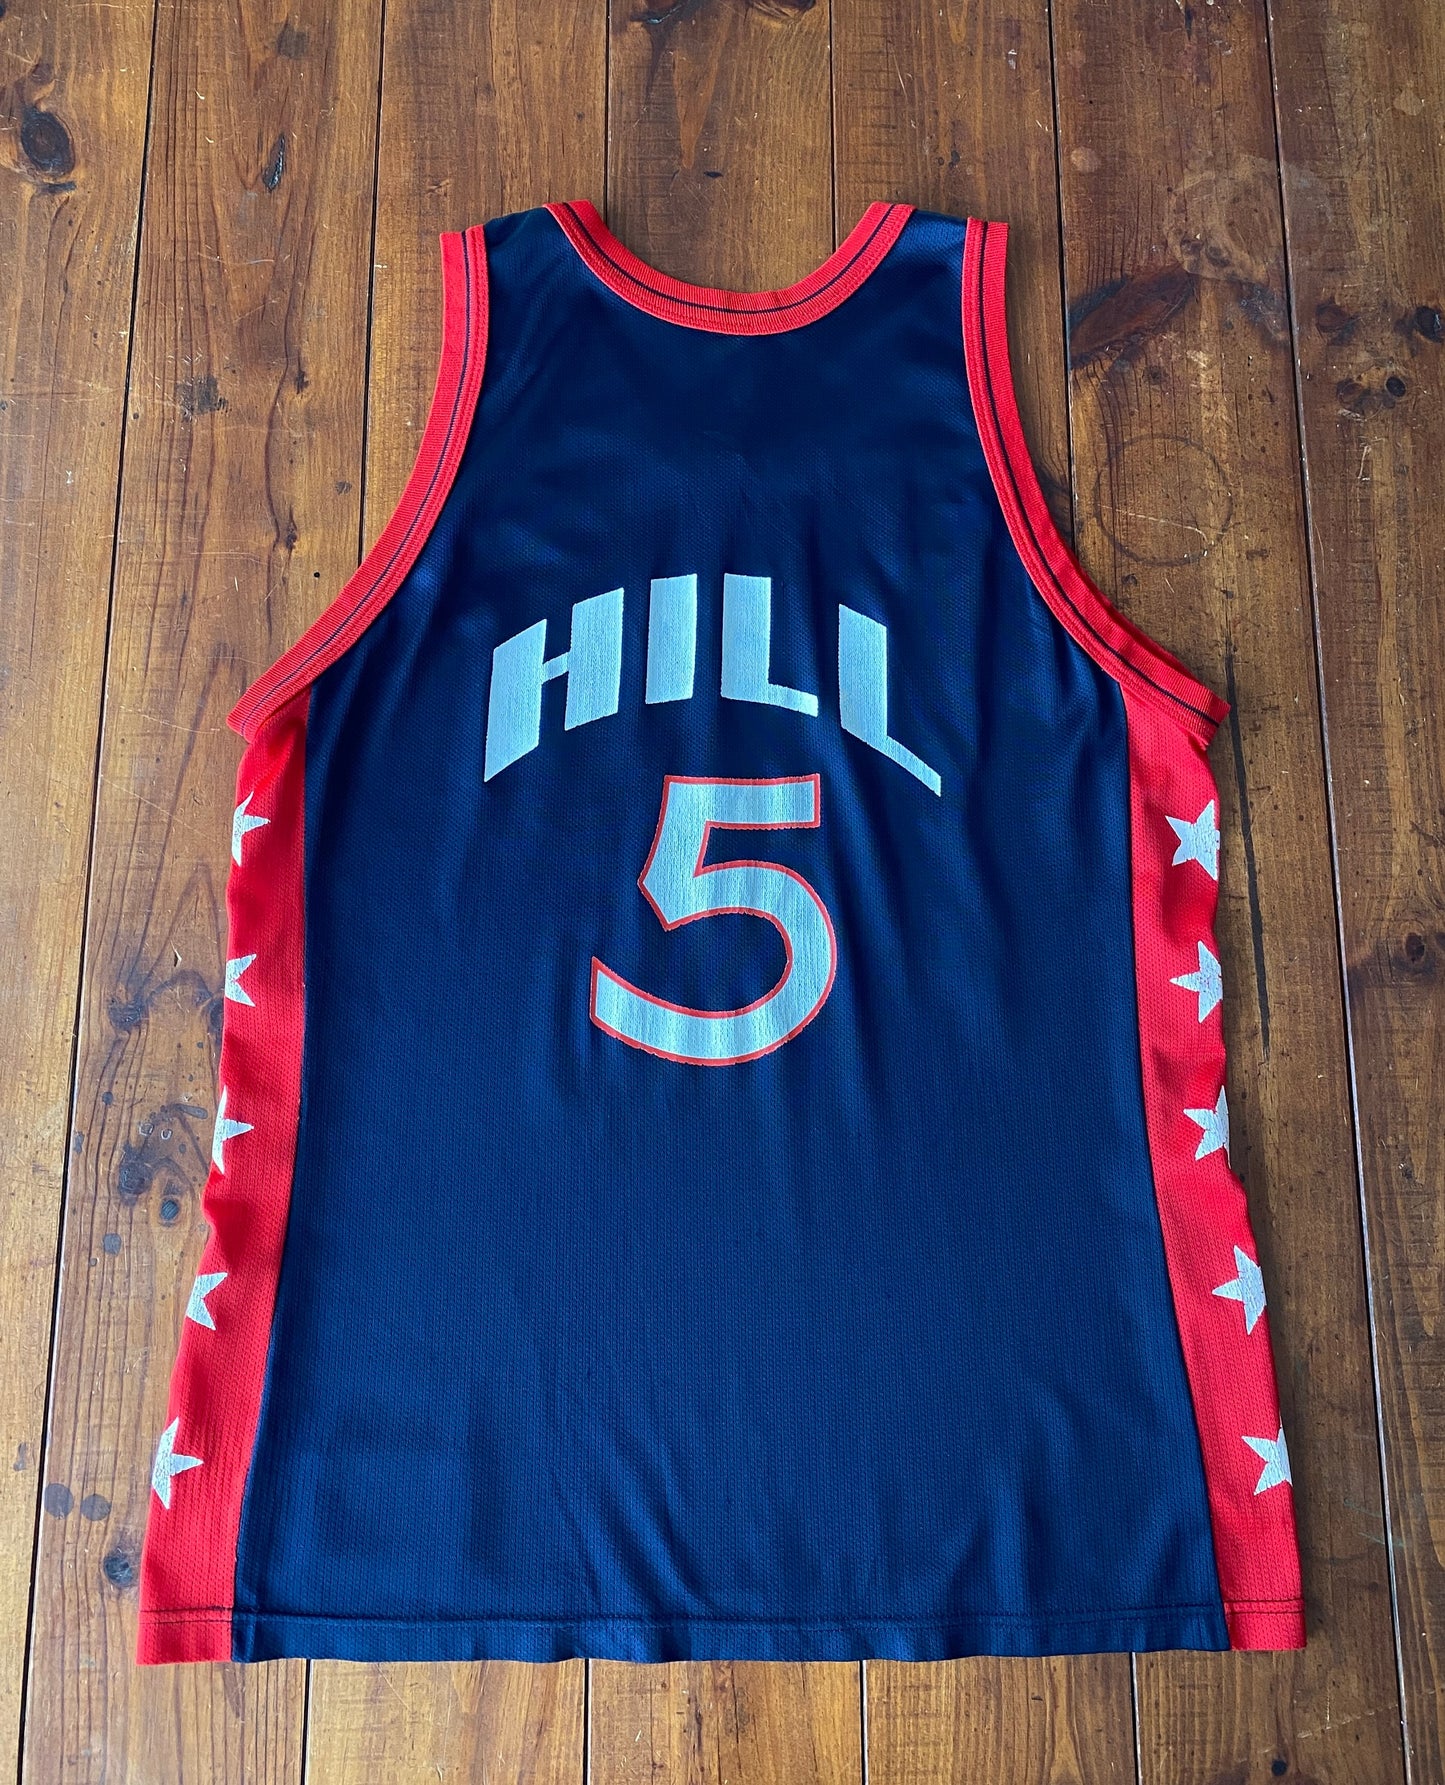 Champion USA Team #5 Hill Jersey, NBA Basketball Jersey, Size 48, Authentic NBA Jersey, Sports Memorabilia, Basketball Apparel